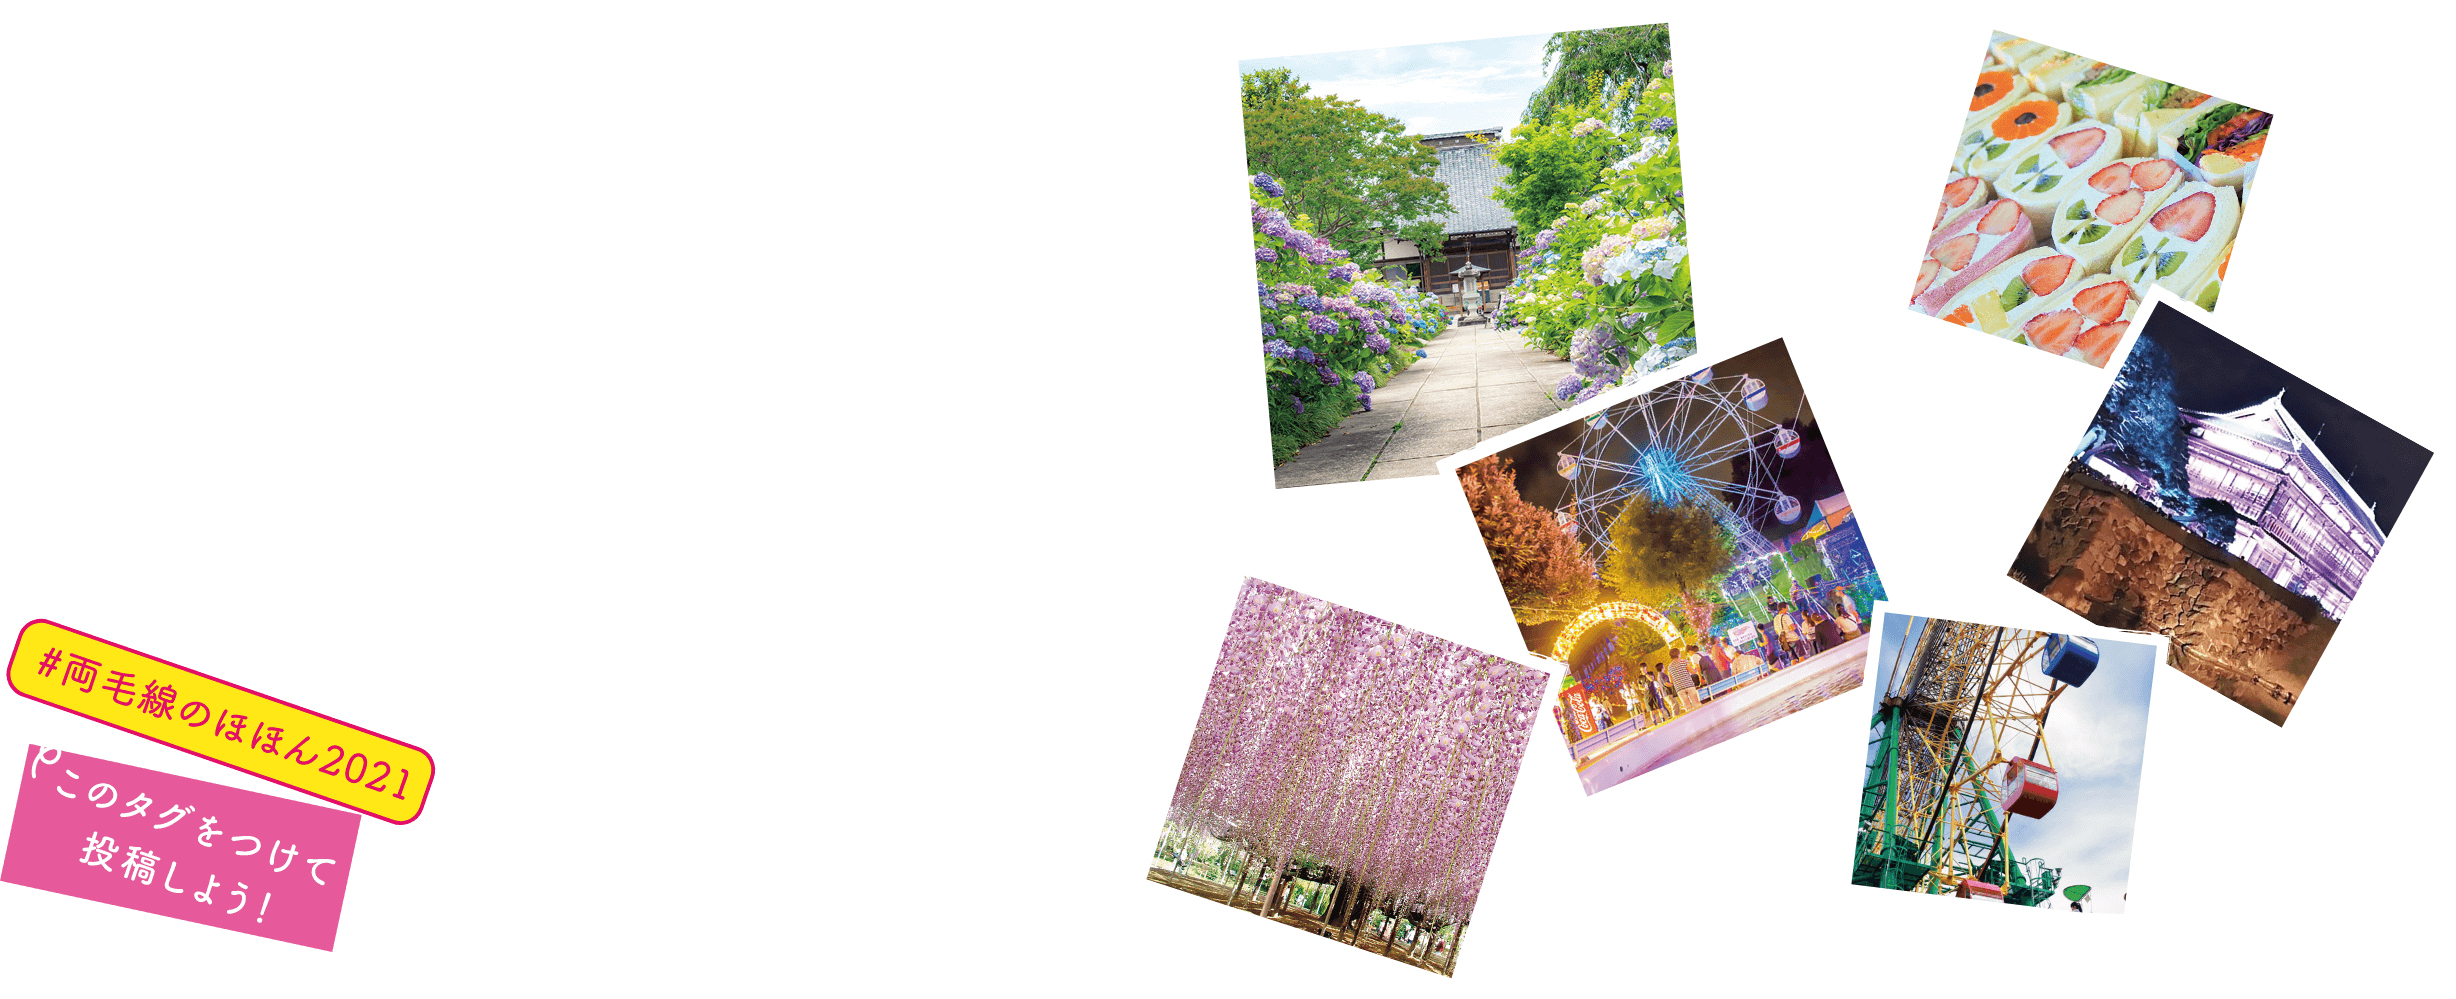 Nohohon のほほんフォトコンテスト photo contest 2021